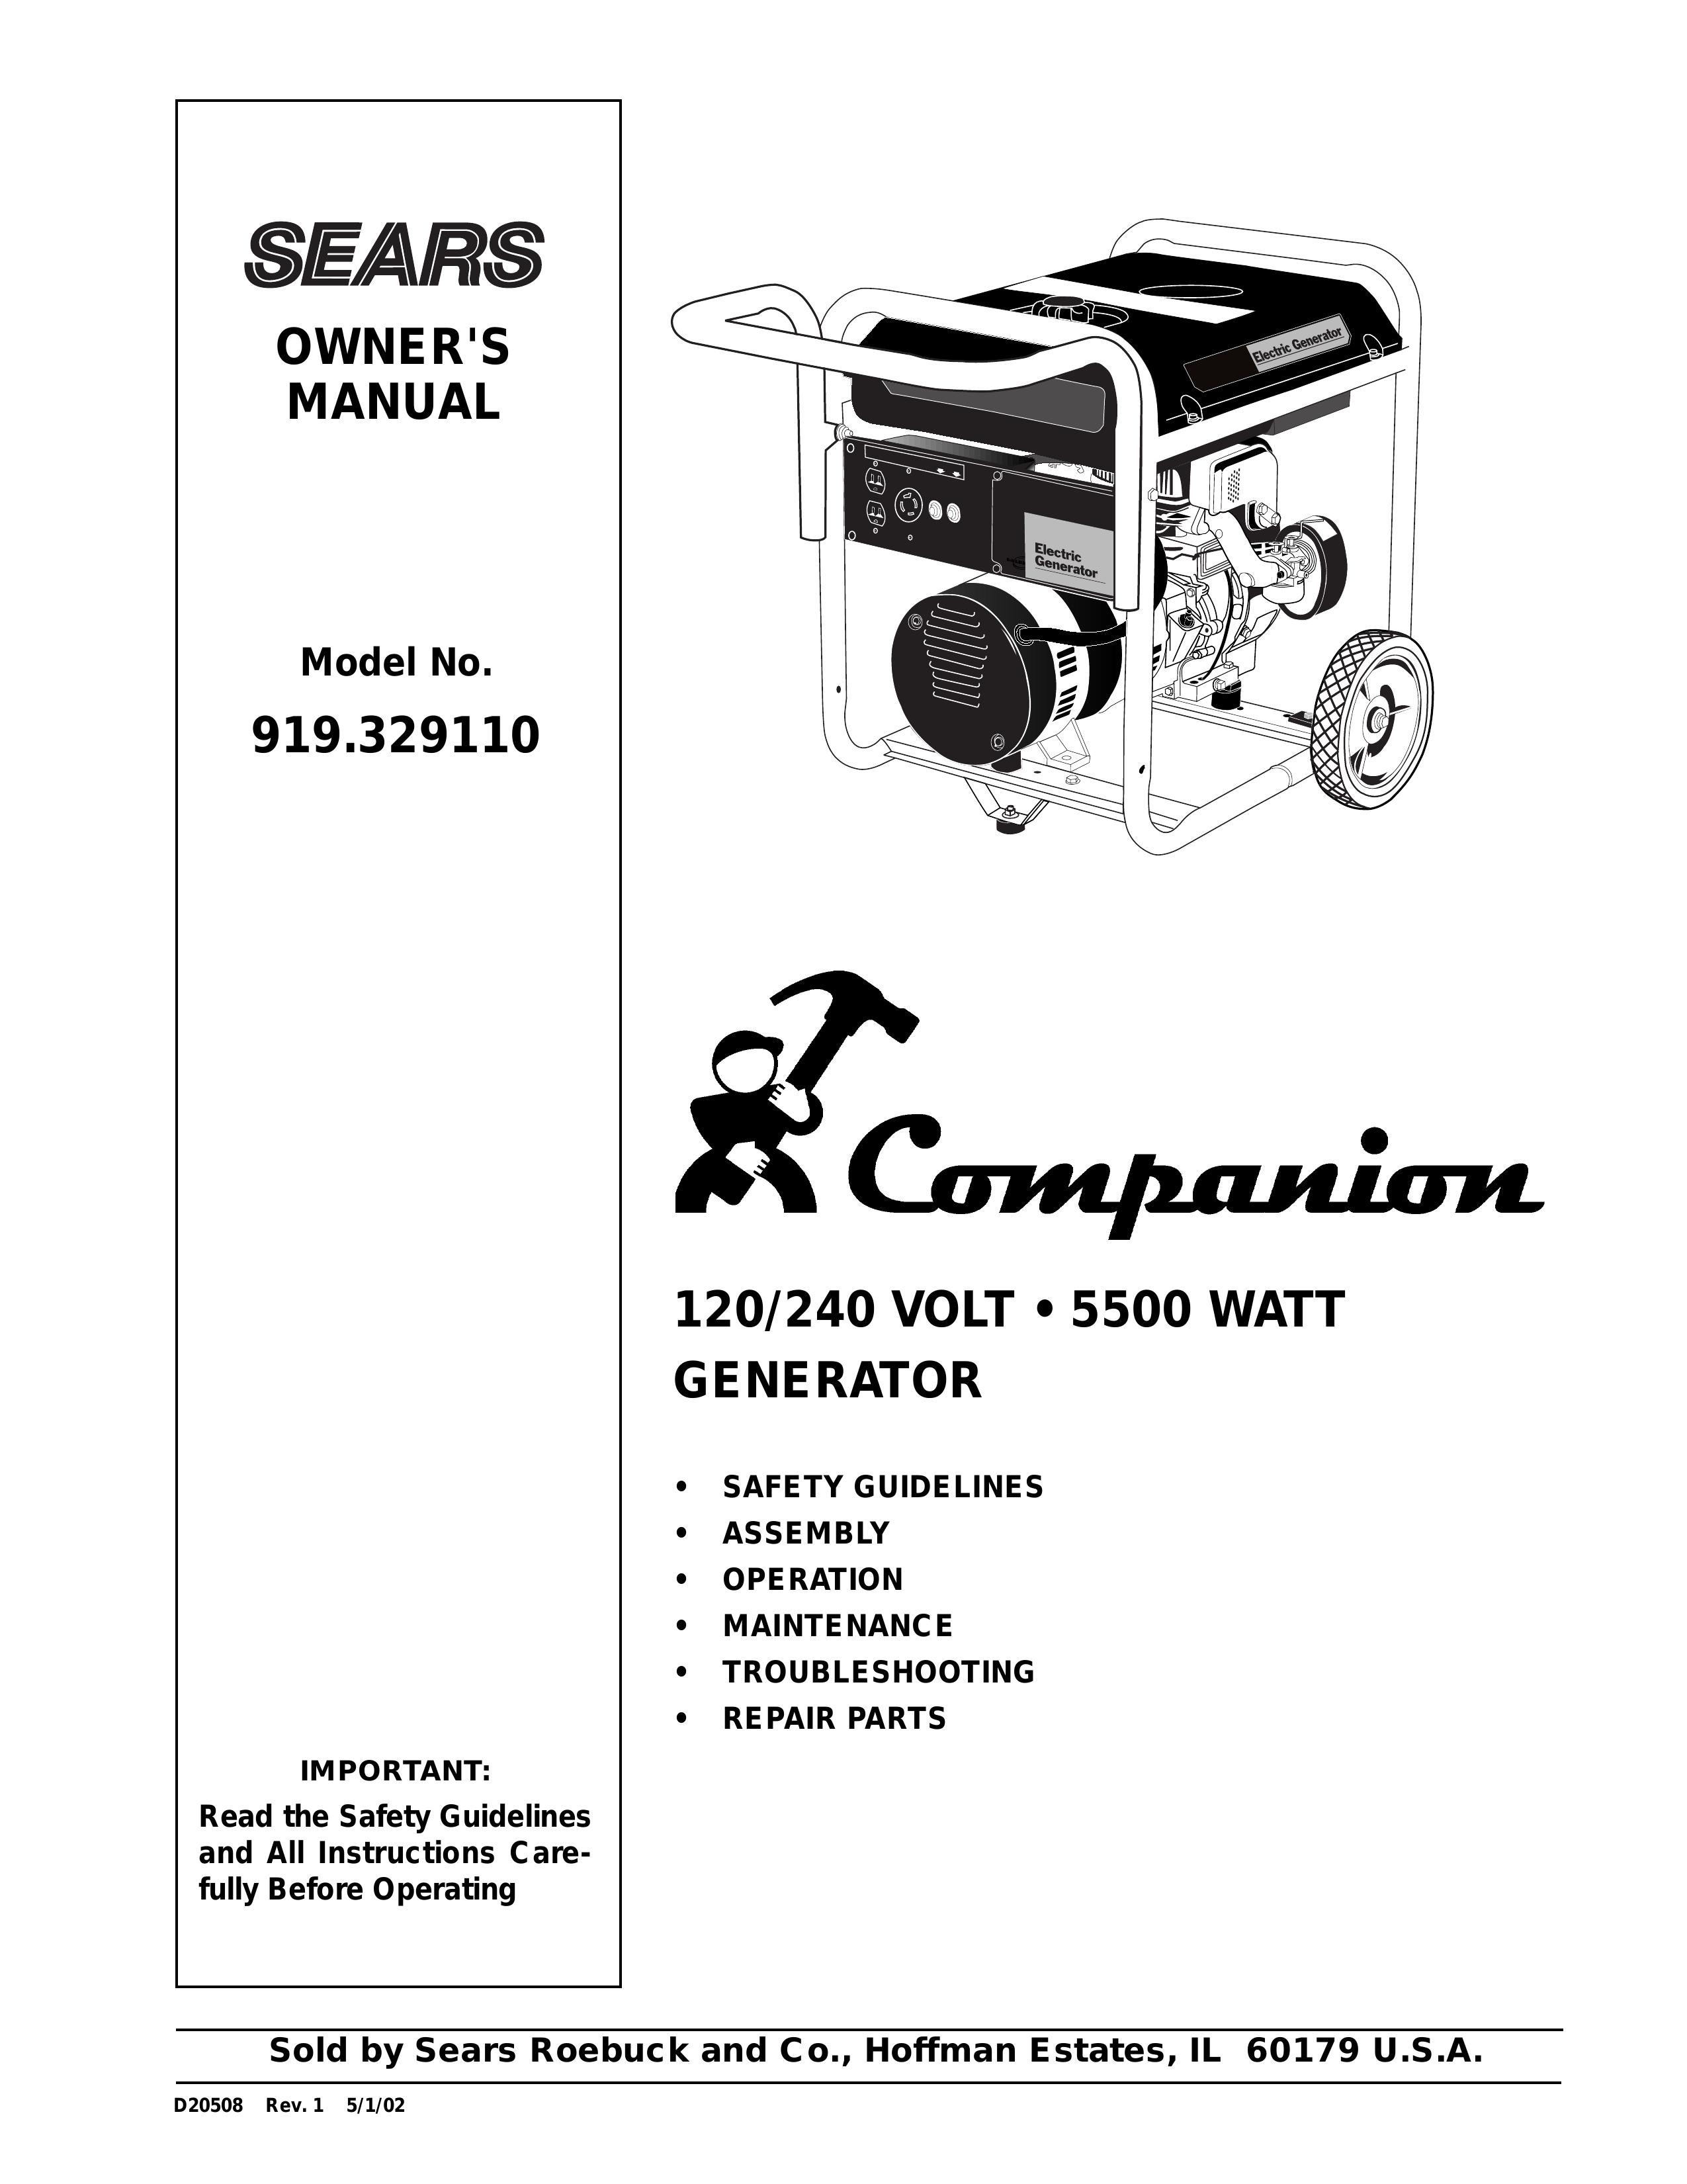 Sears 919.329110 Portable Generator User Manual